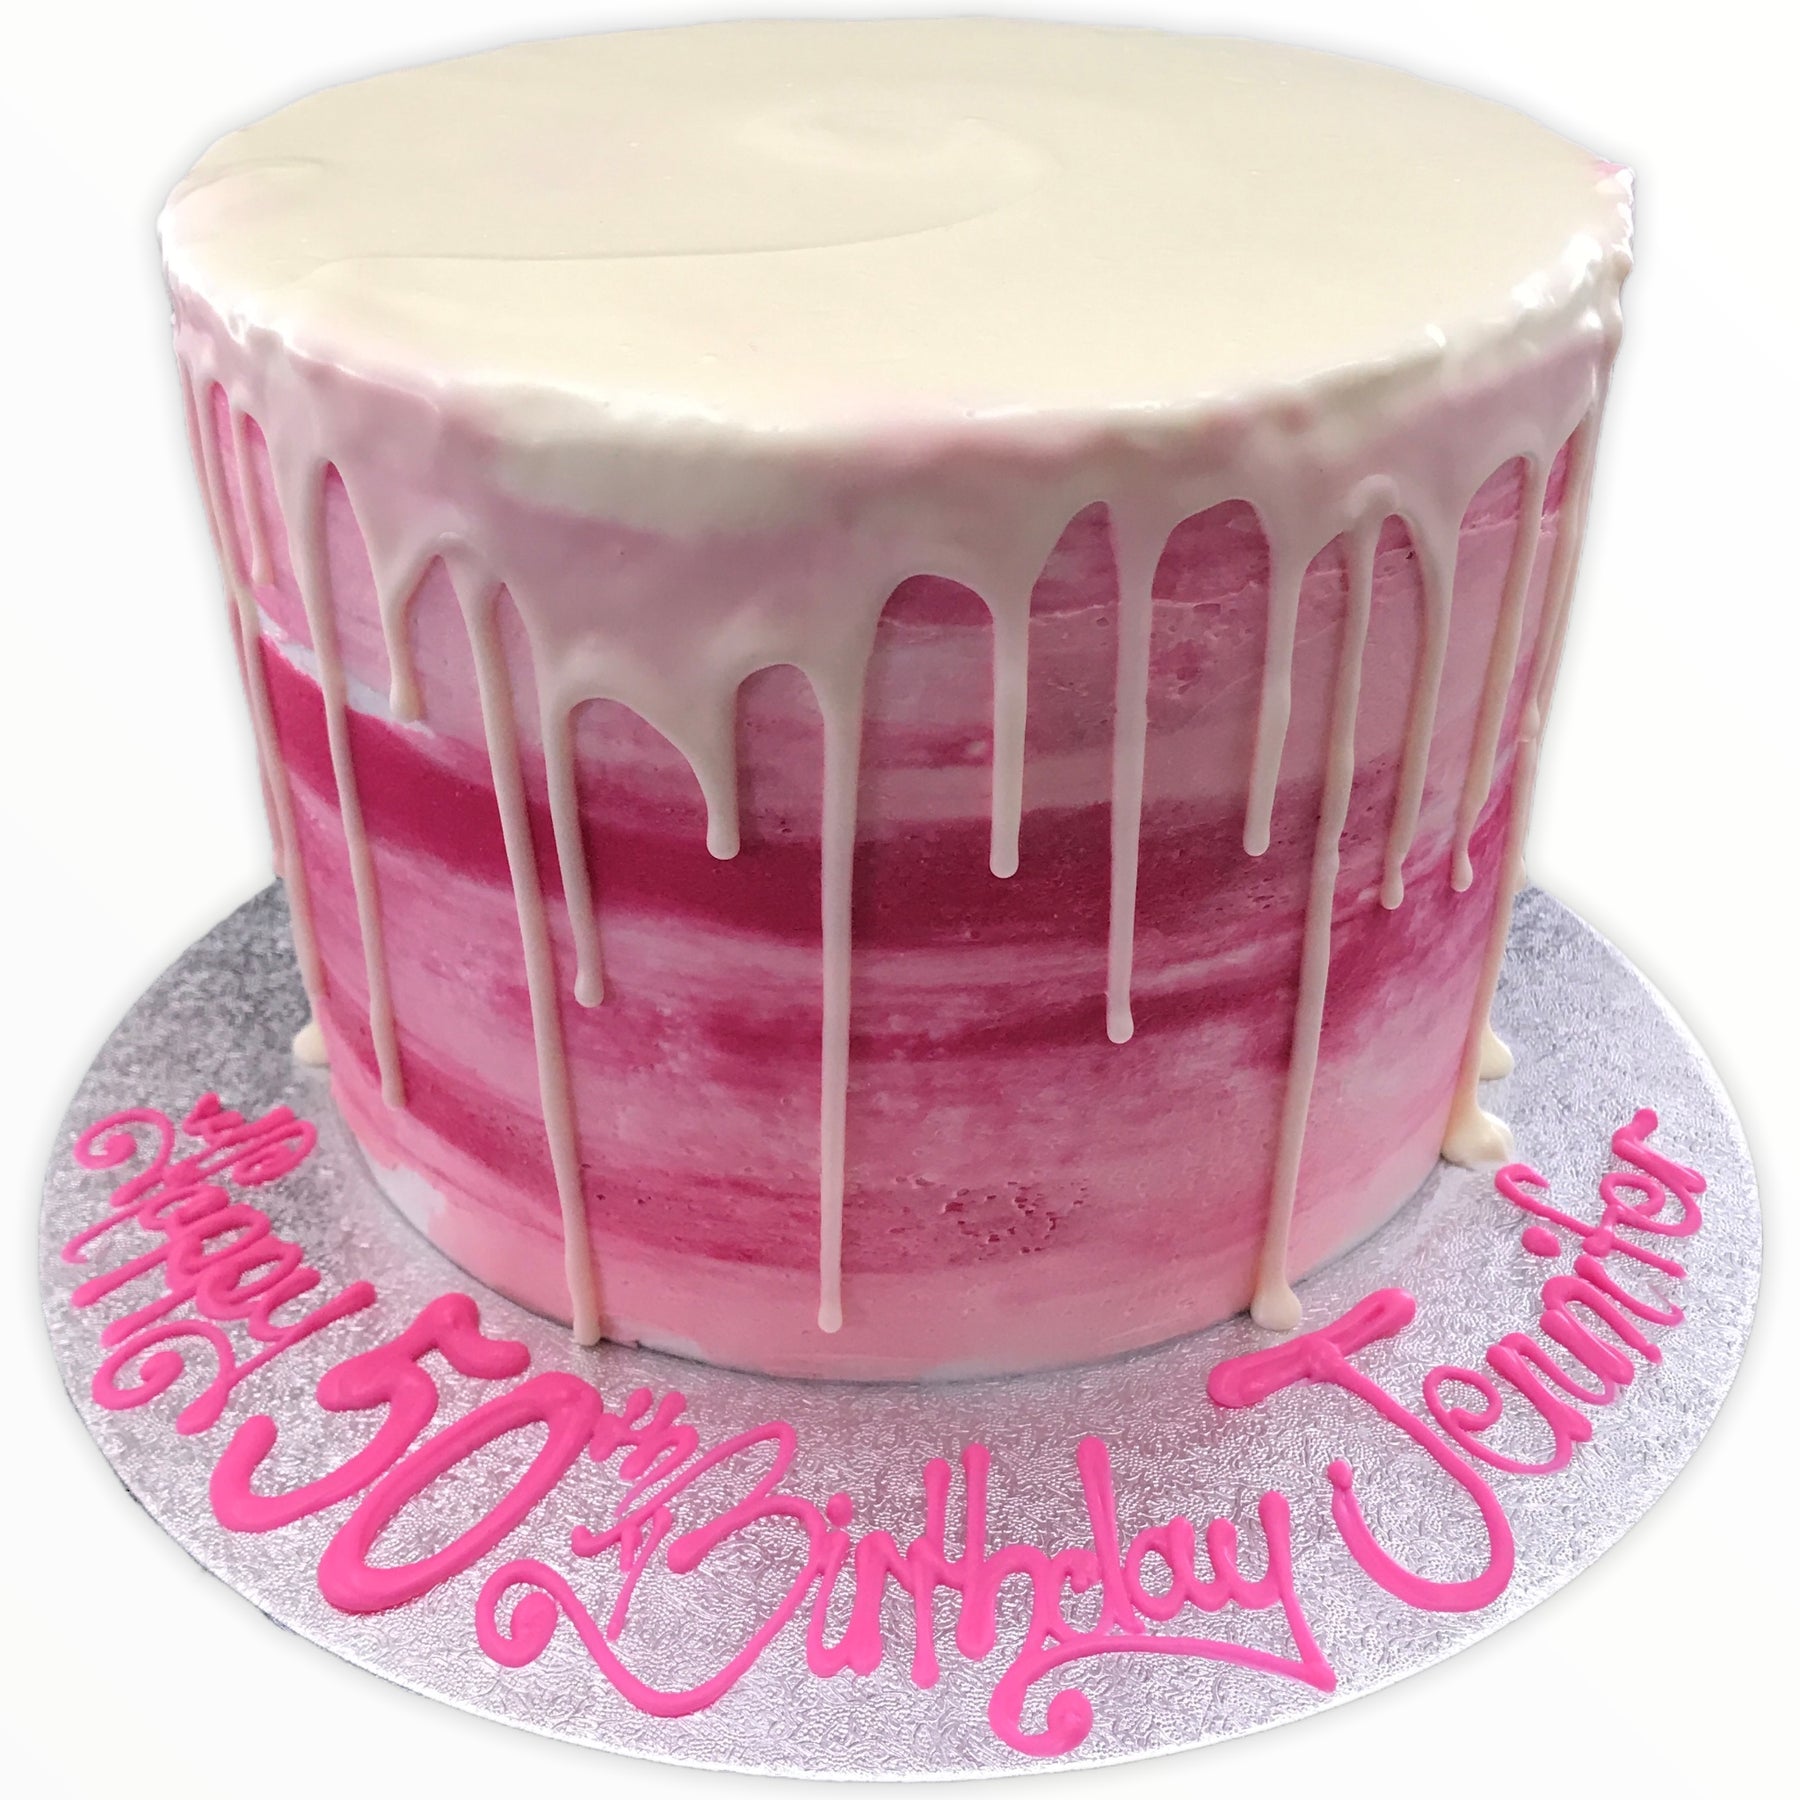 PINTEREST INSPIRED BIRTHDAY DRIP CAKE - YouTube